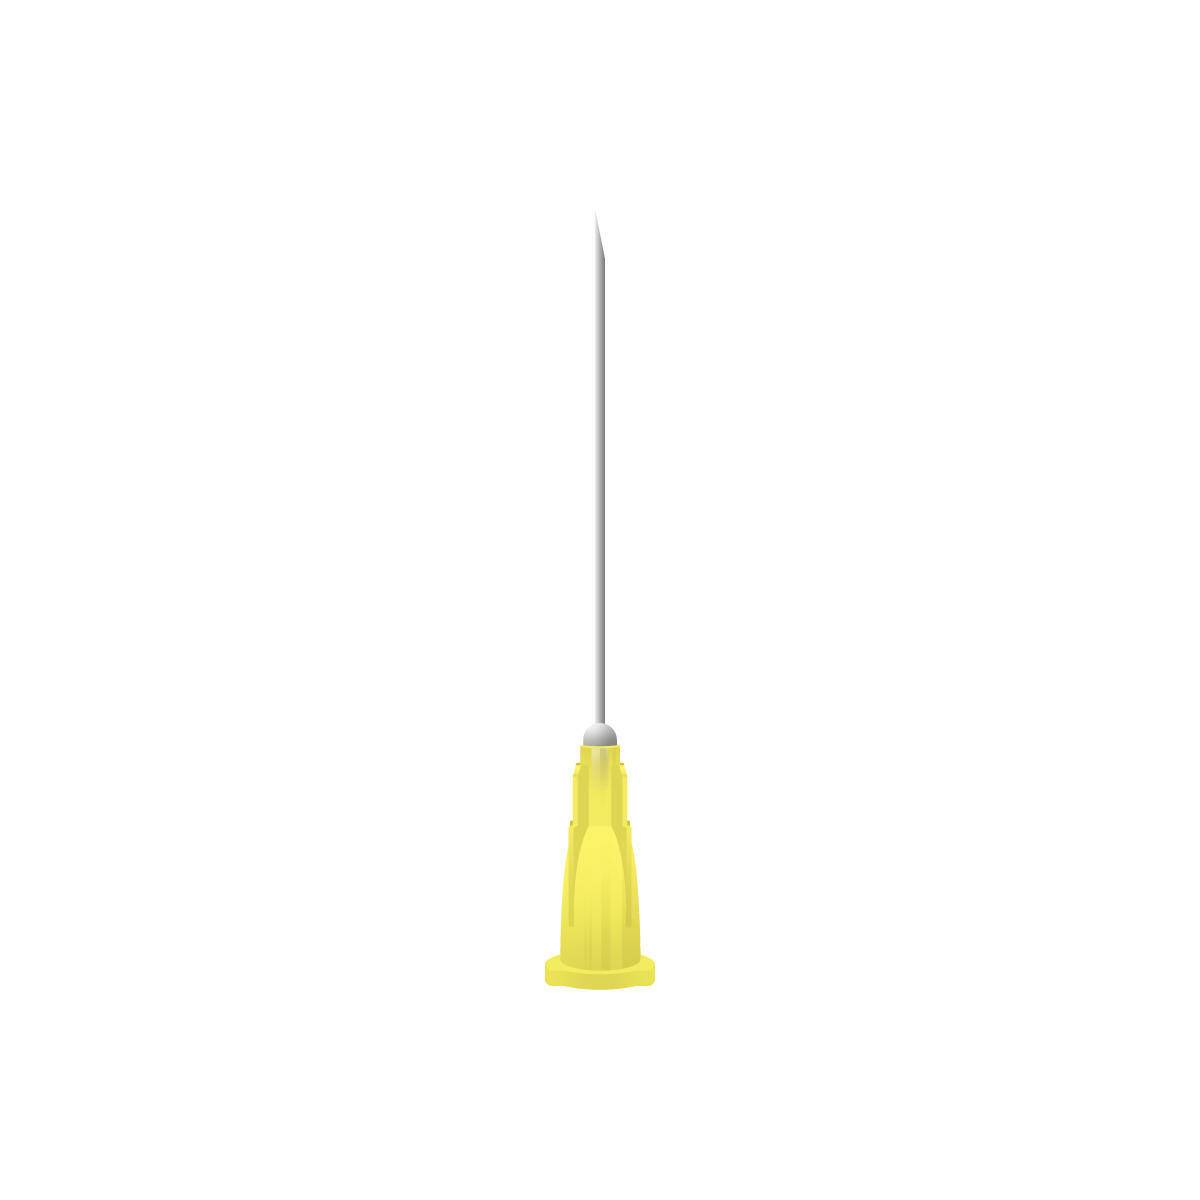 20g Yellow 1.5 inch BD Microlance Needles (40mm x 0.9mm) - UKMEDI